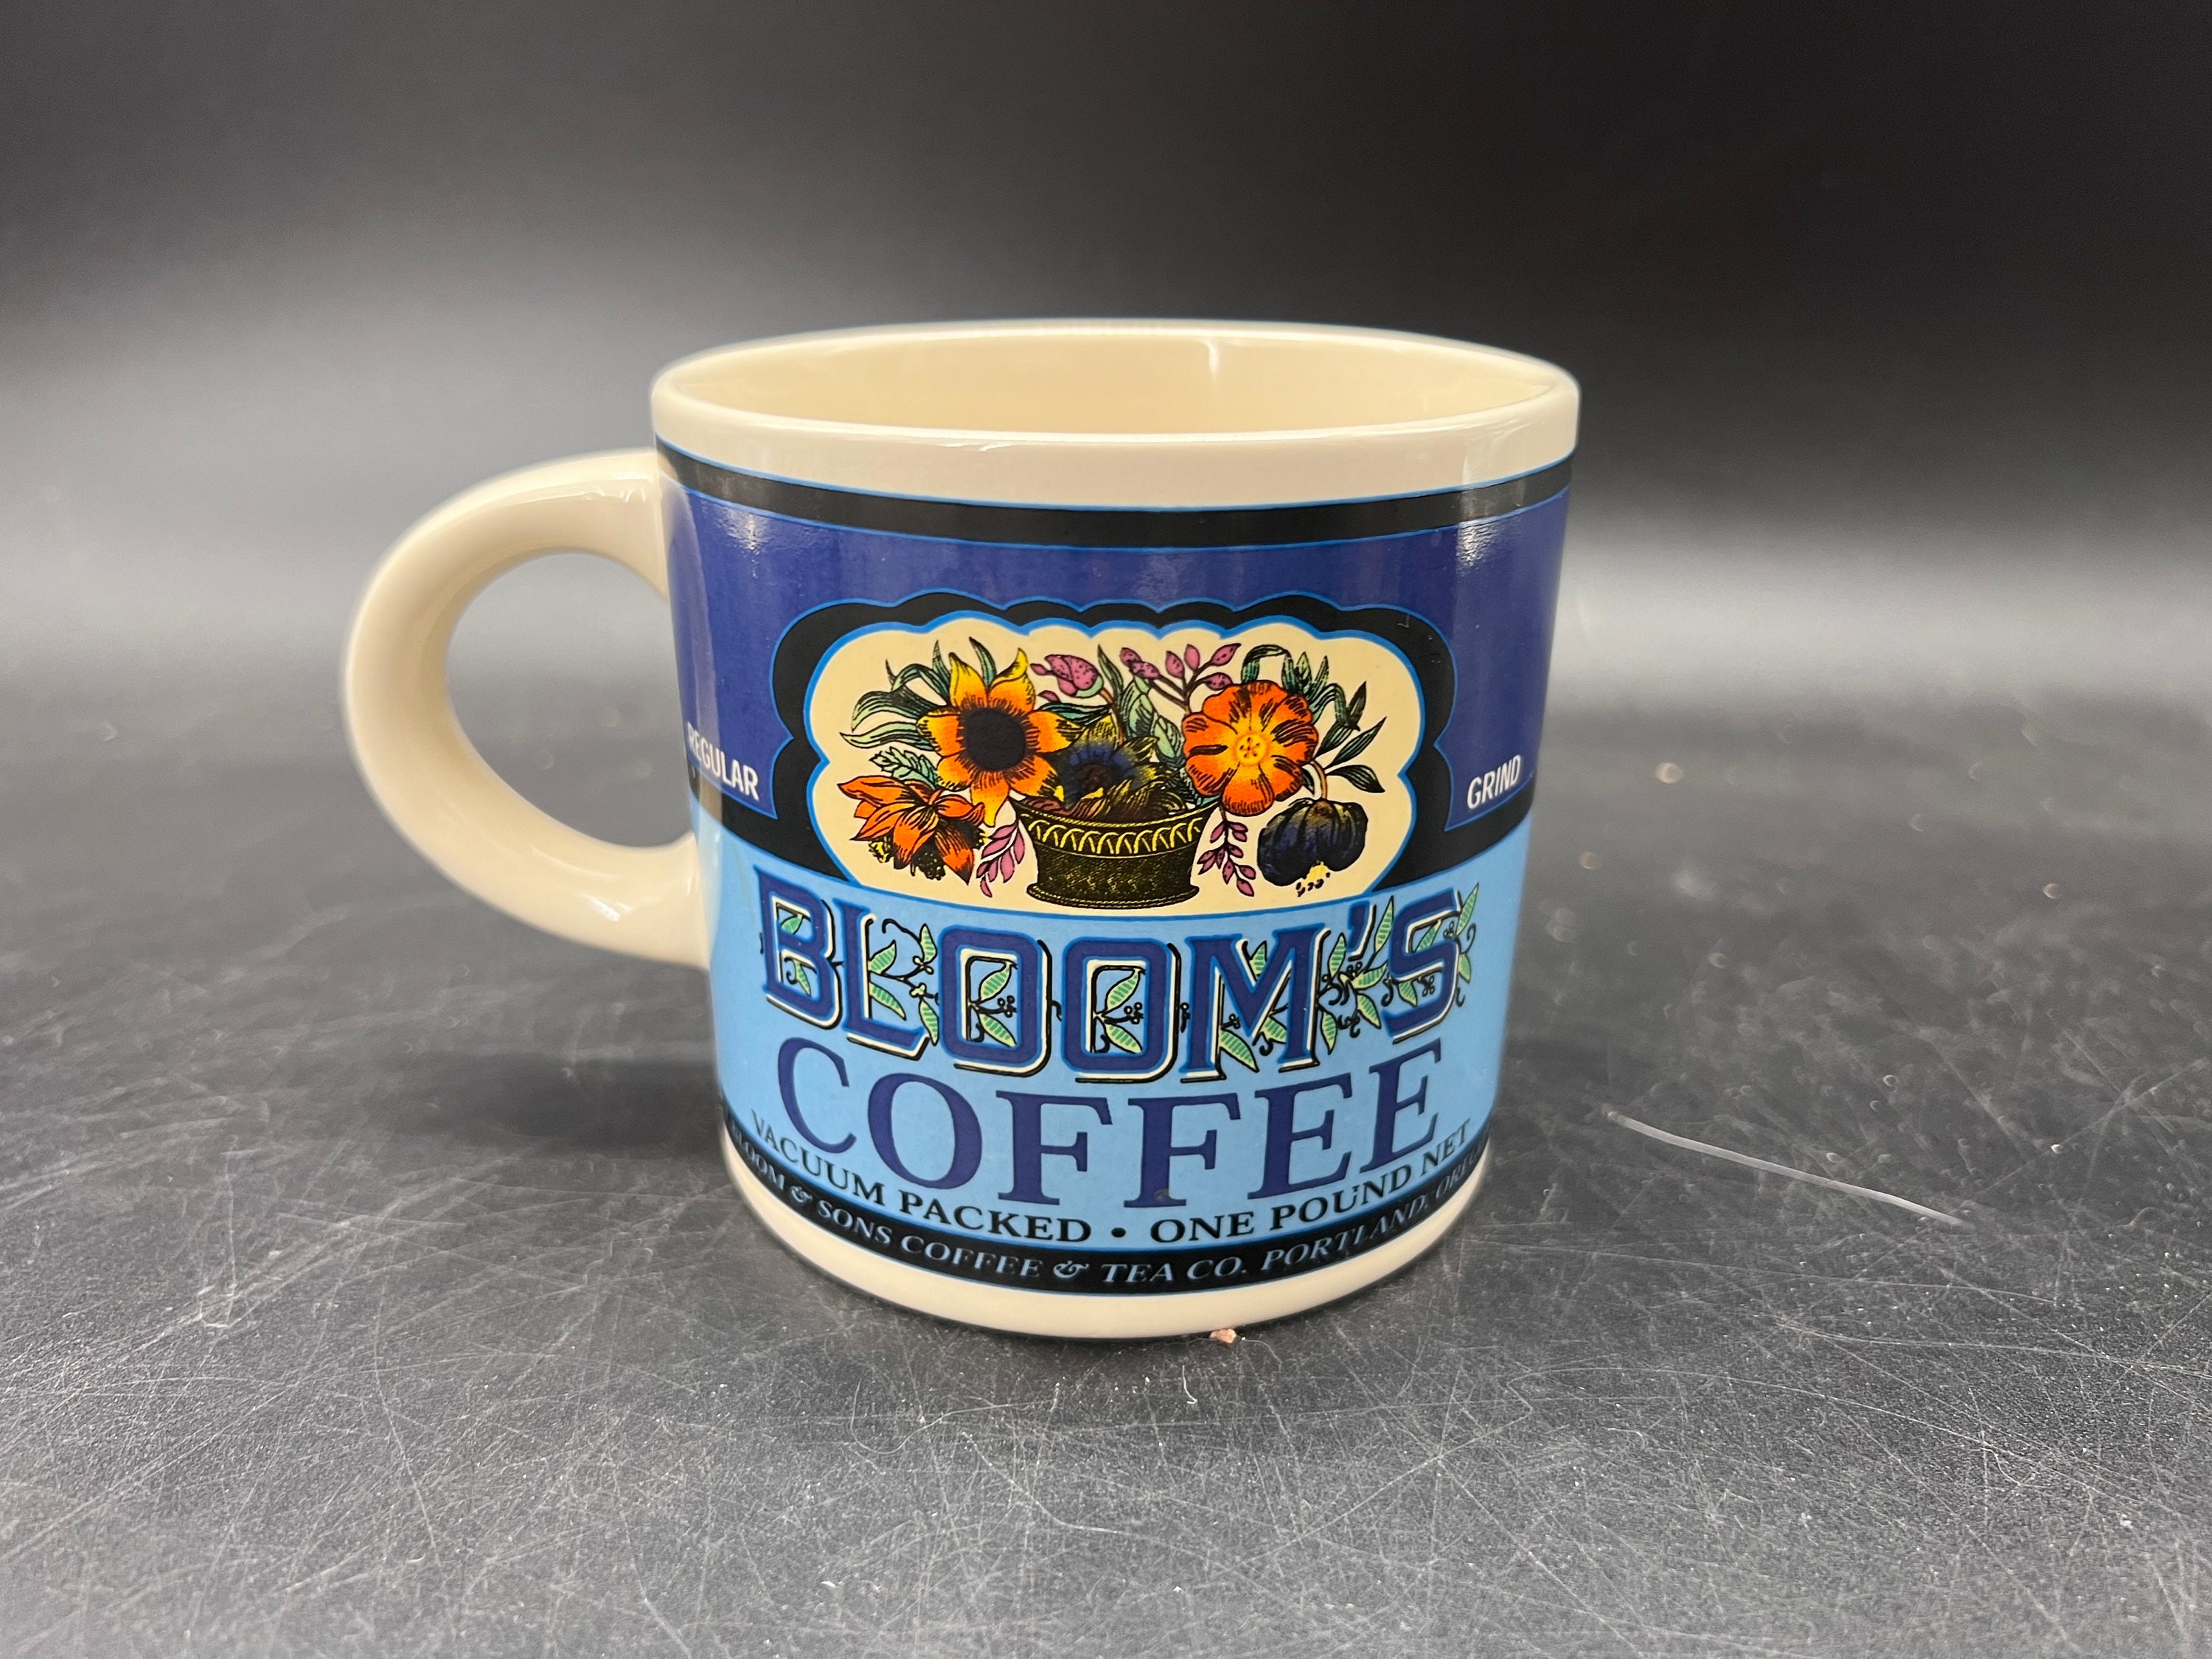 VTG Kasper's Monogram Vacuum Packed Coffee Mug Cup ceramic vintage